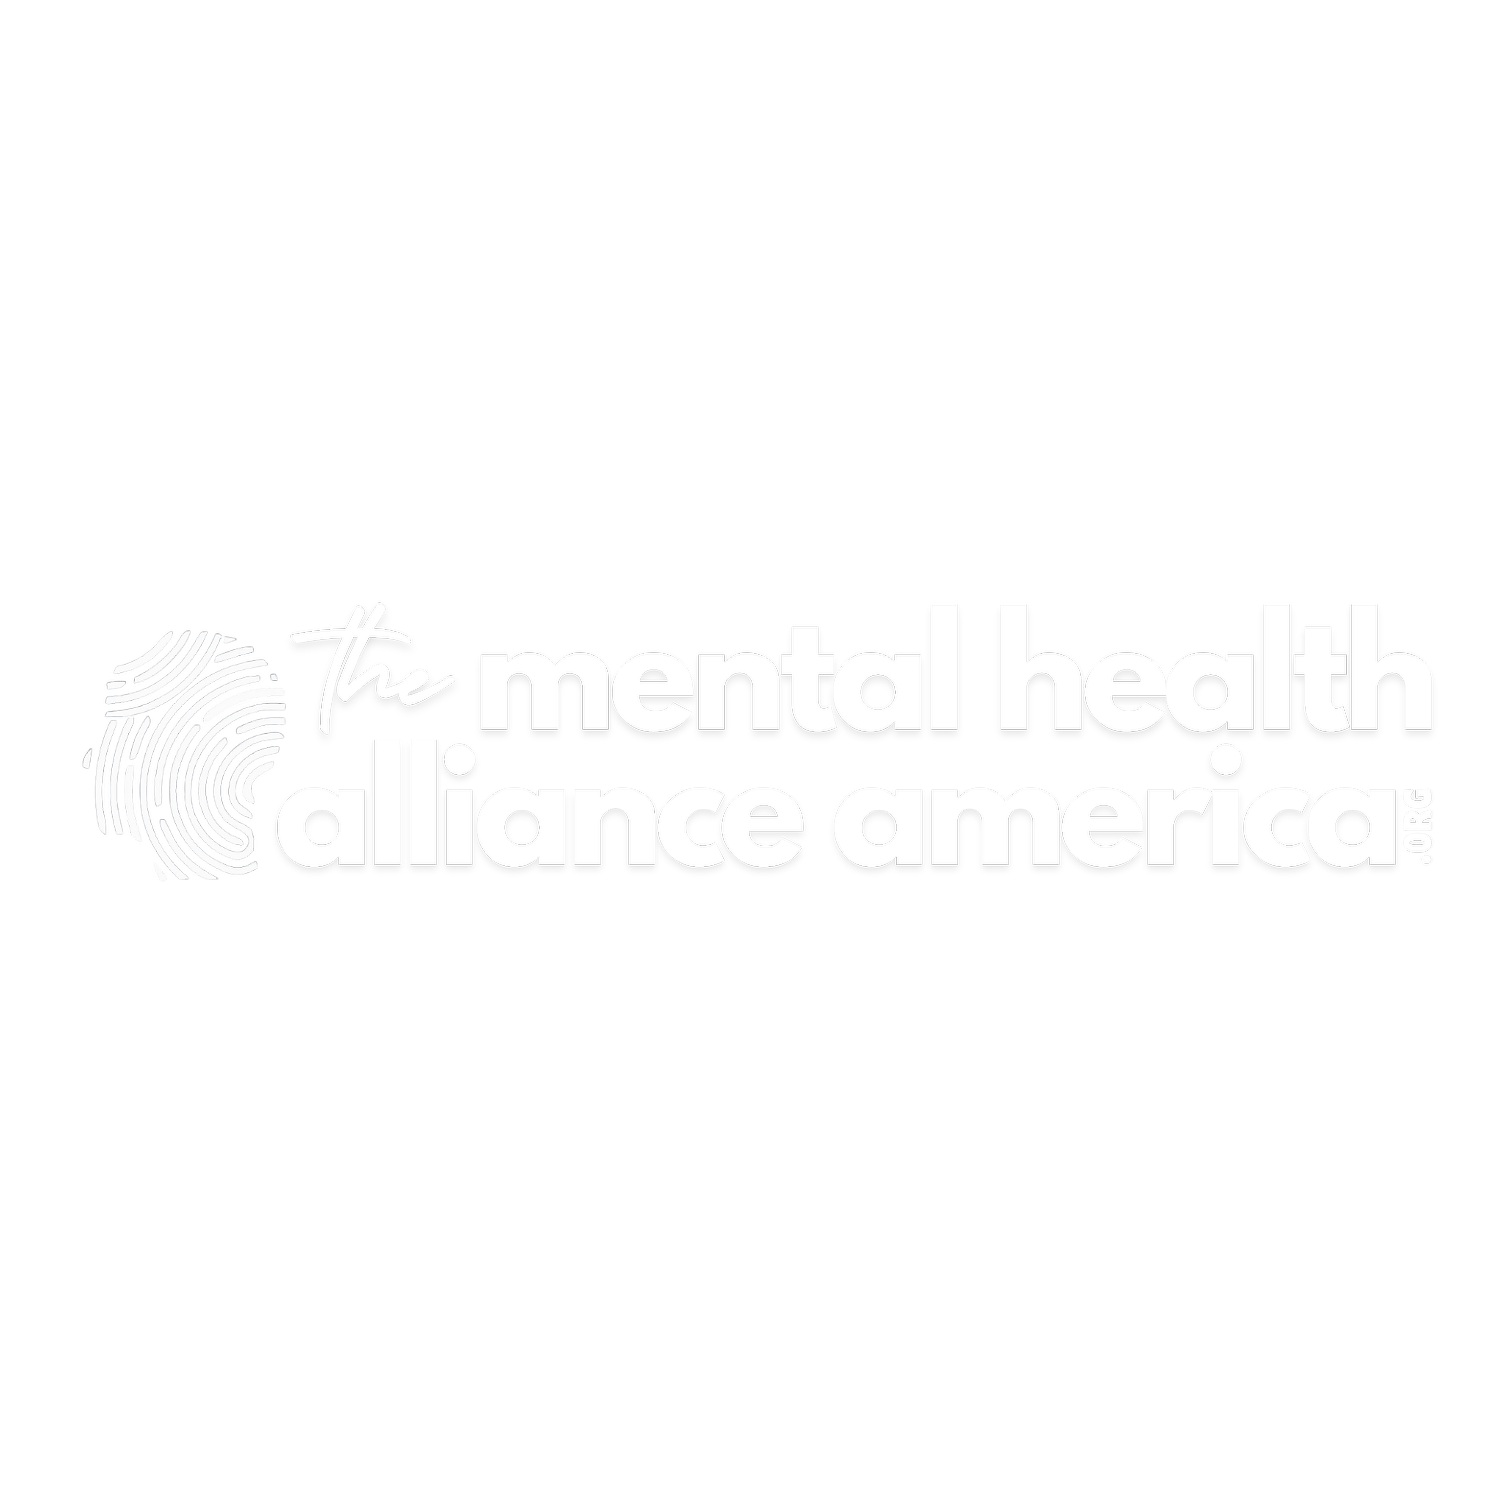 The Mental Health Alliance